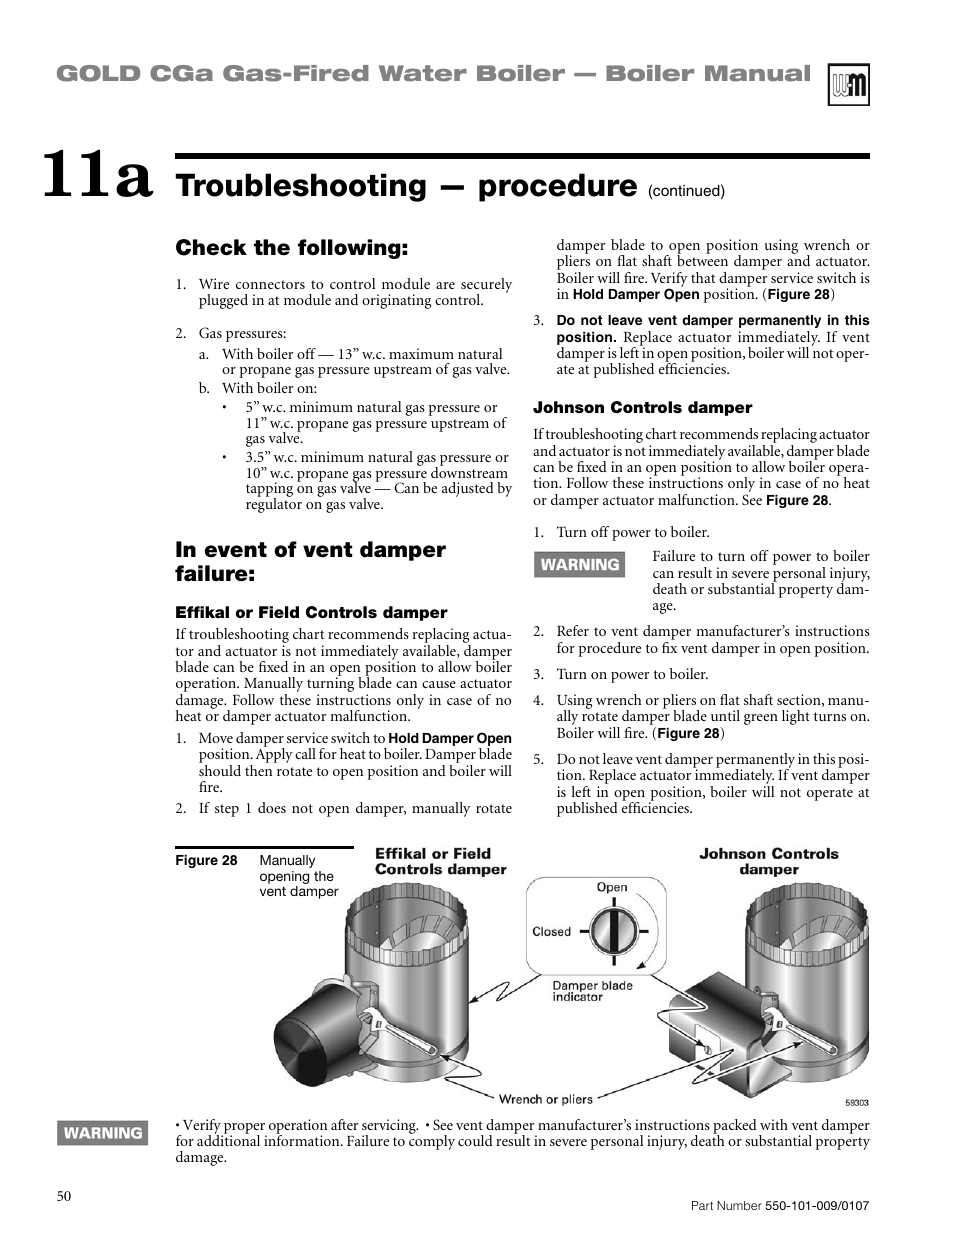 Troubleshooting — procedure, Gold cga gas-fired water boiler ...